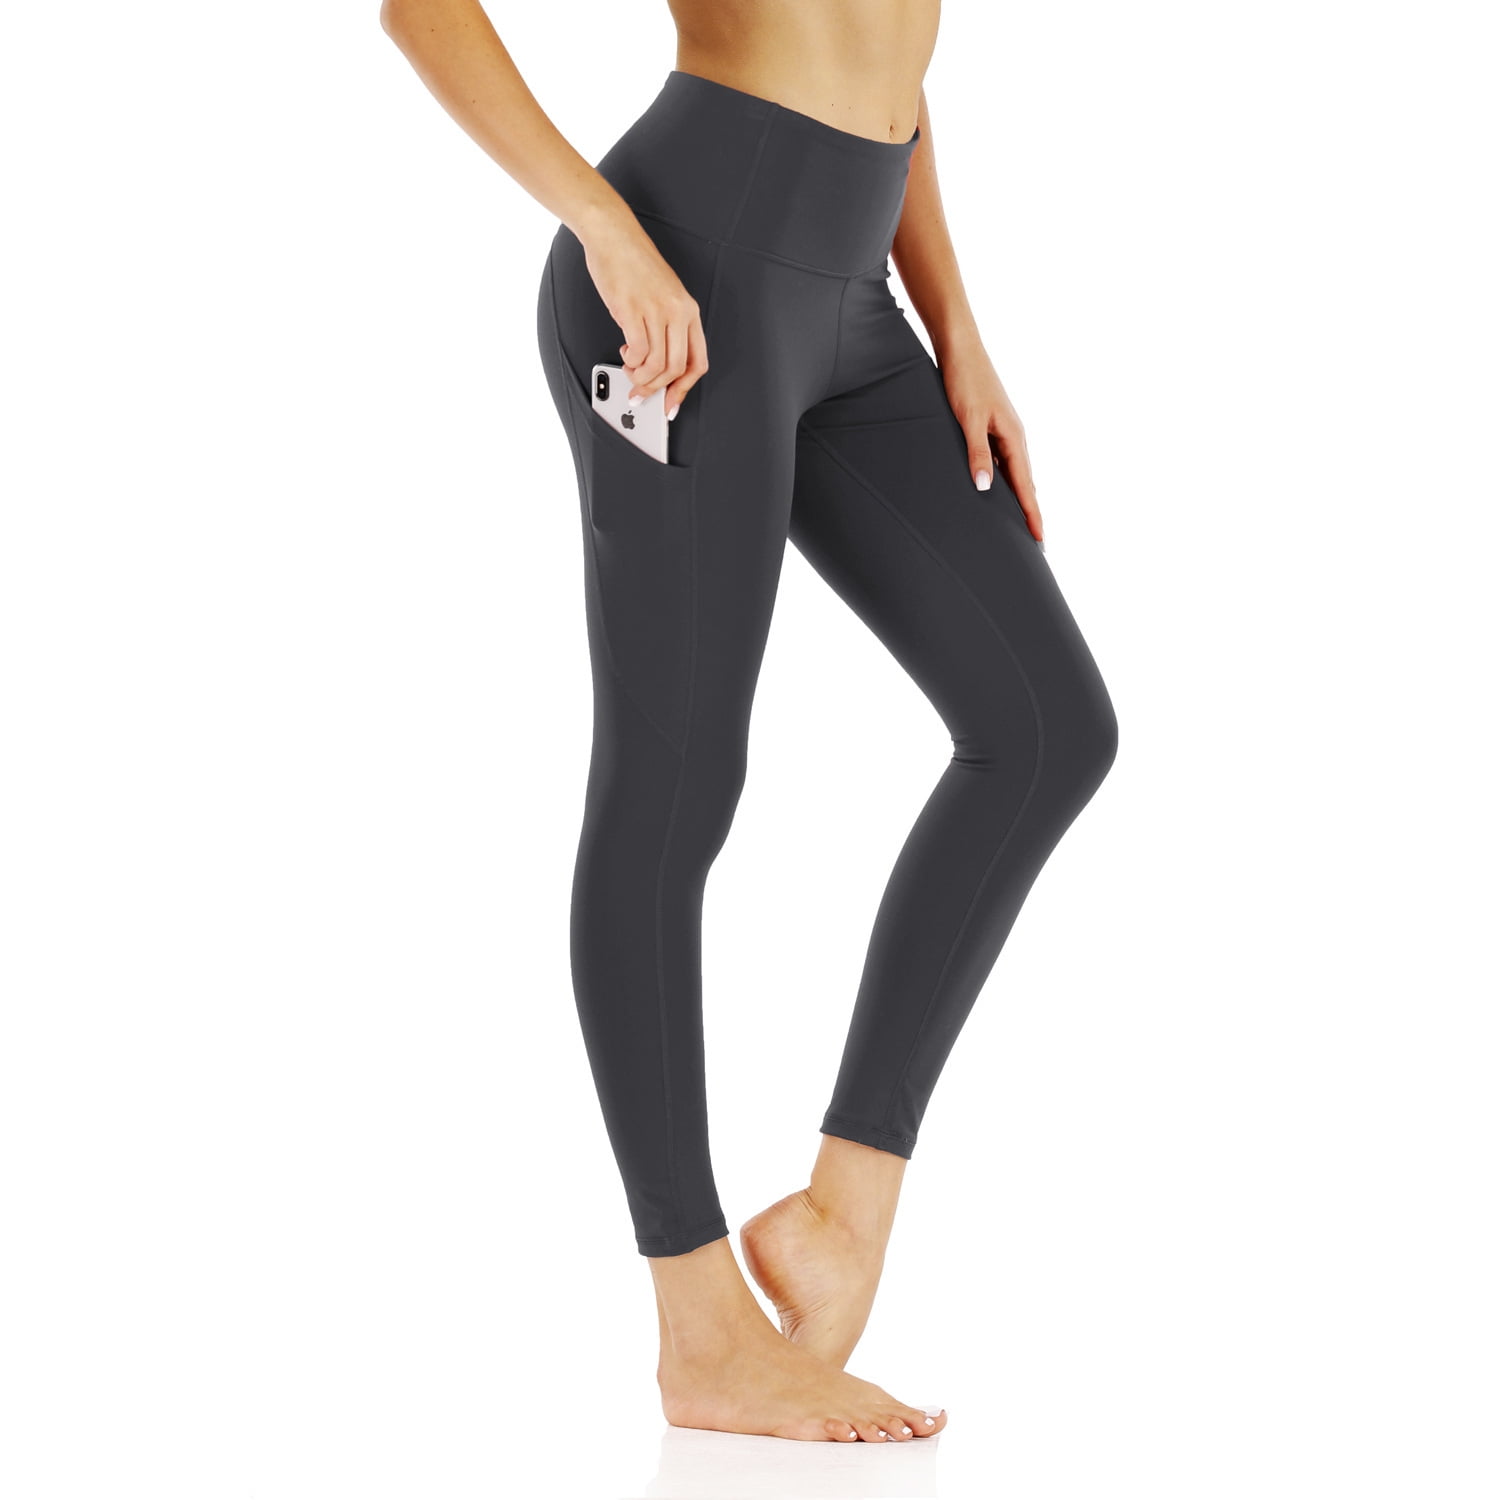 Women's Double-Sided Nylon Sports Tight Fitness Yoga Pants | Walmart Canada